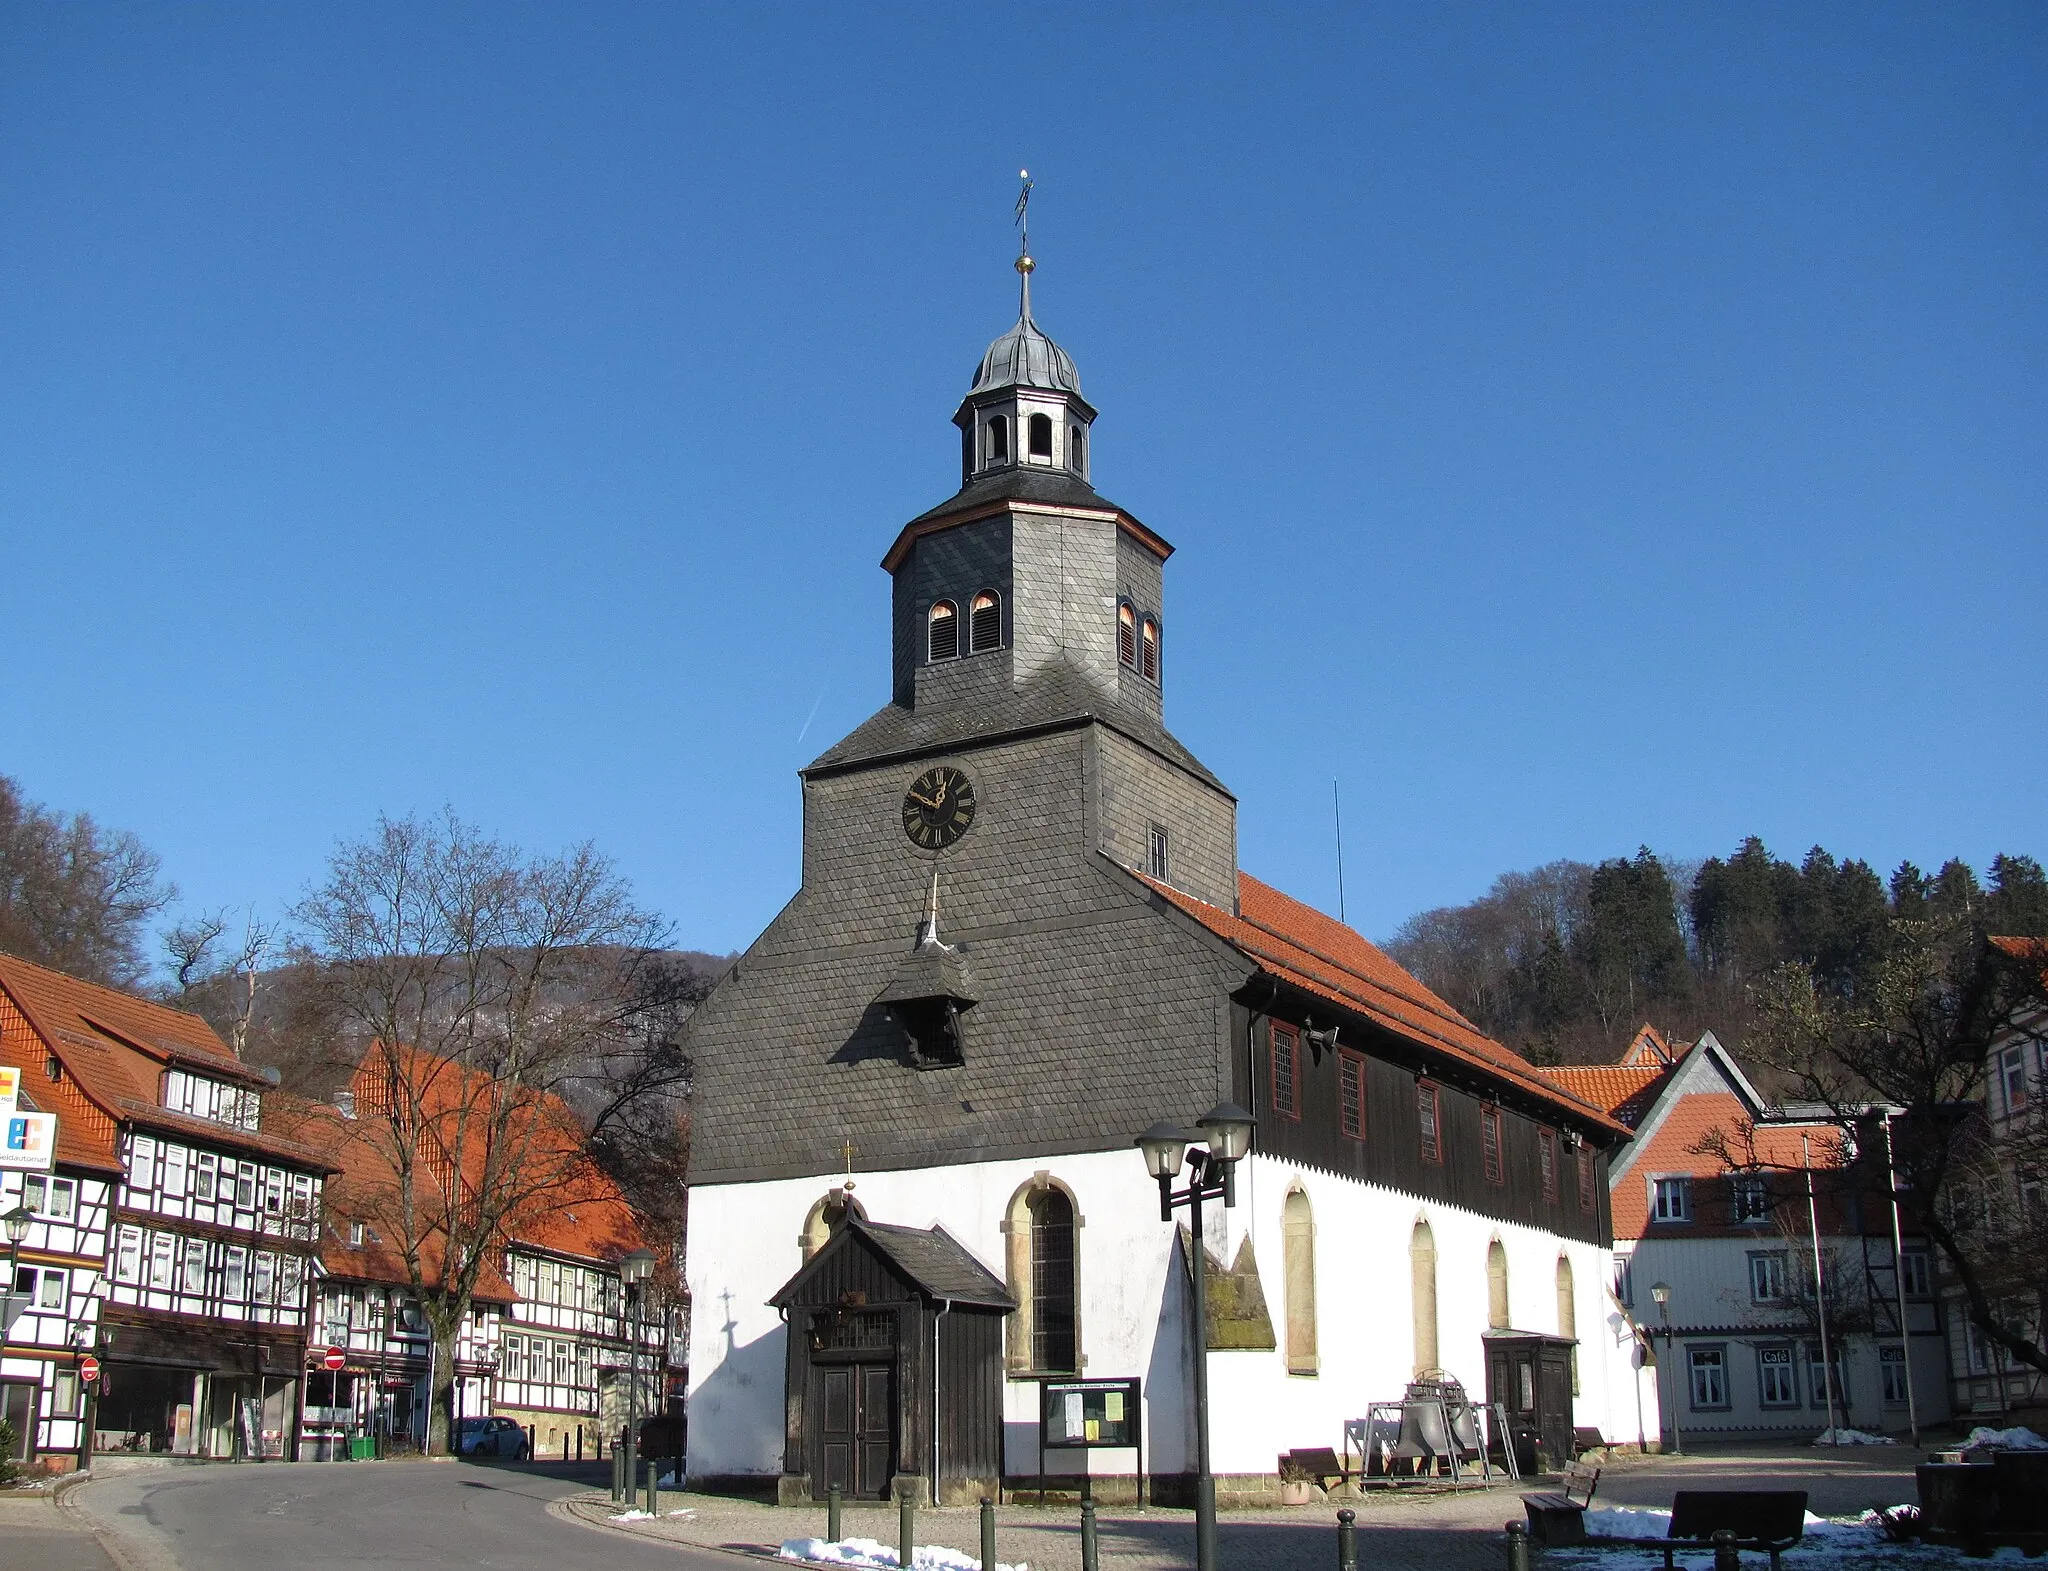 Photo showing: Market Place, Bad Grund, Harz Mountains,Germany